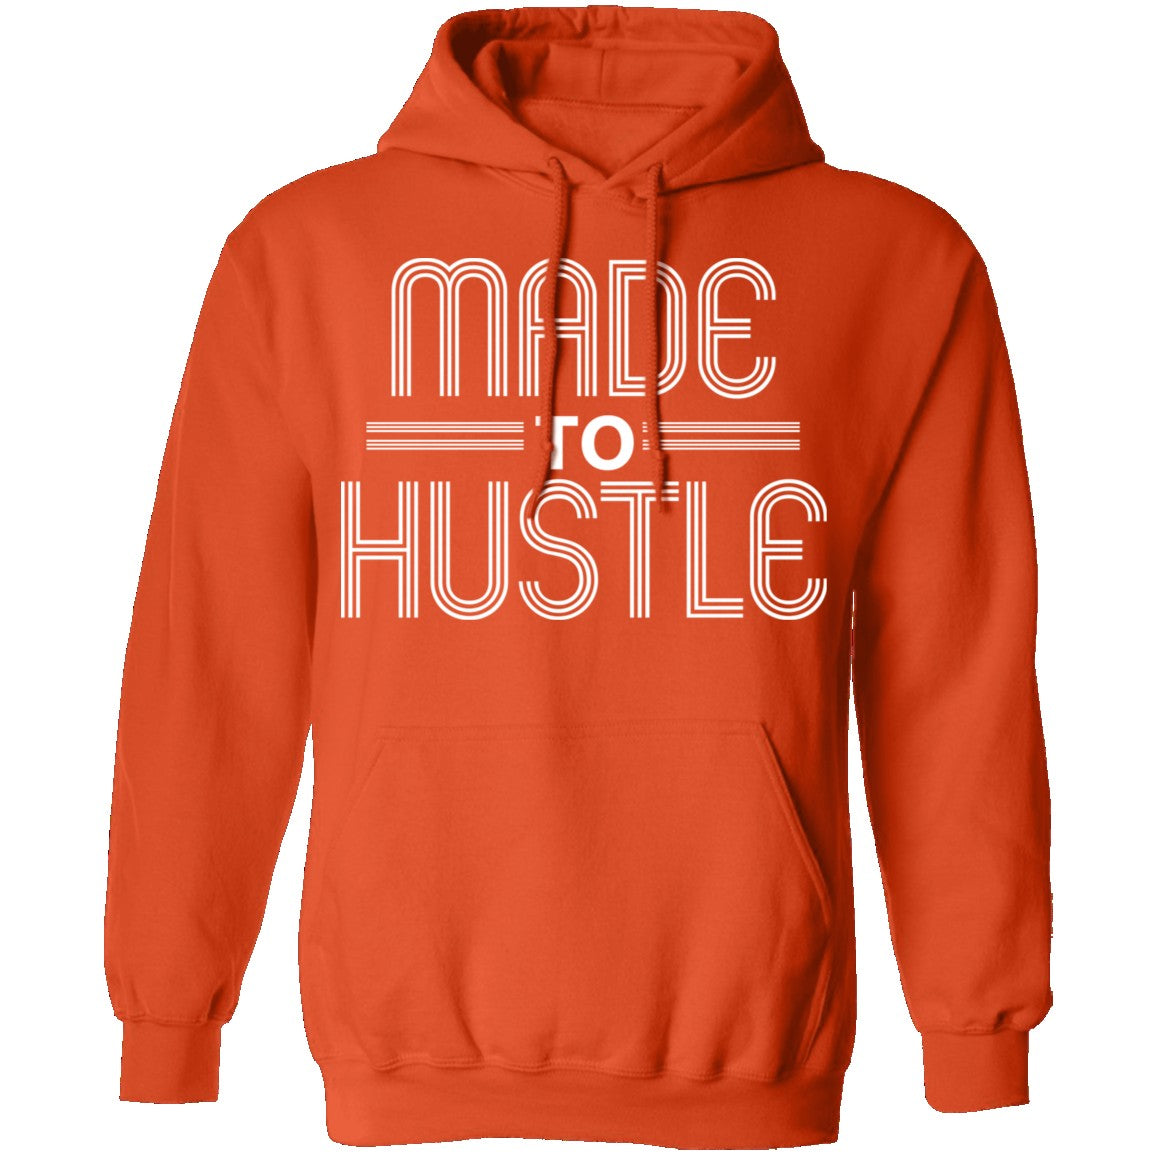 Made to Hustle Pullover Hoodie 8 oz. freeshipping - Bedroka Streetwear LLC